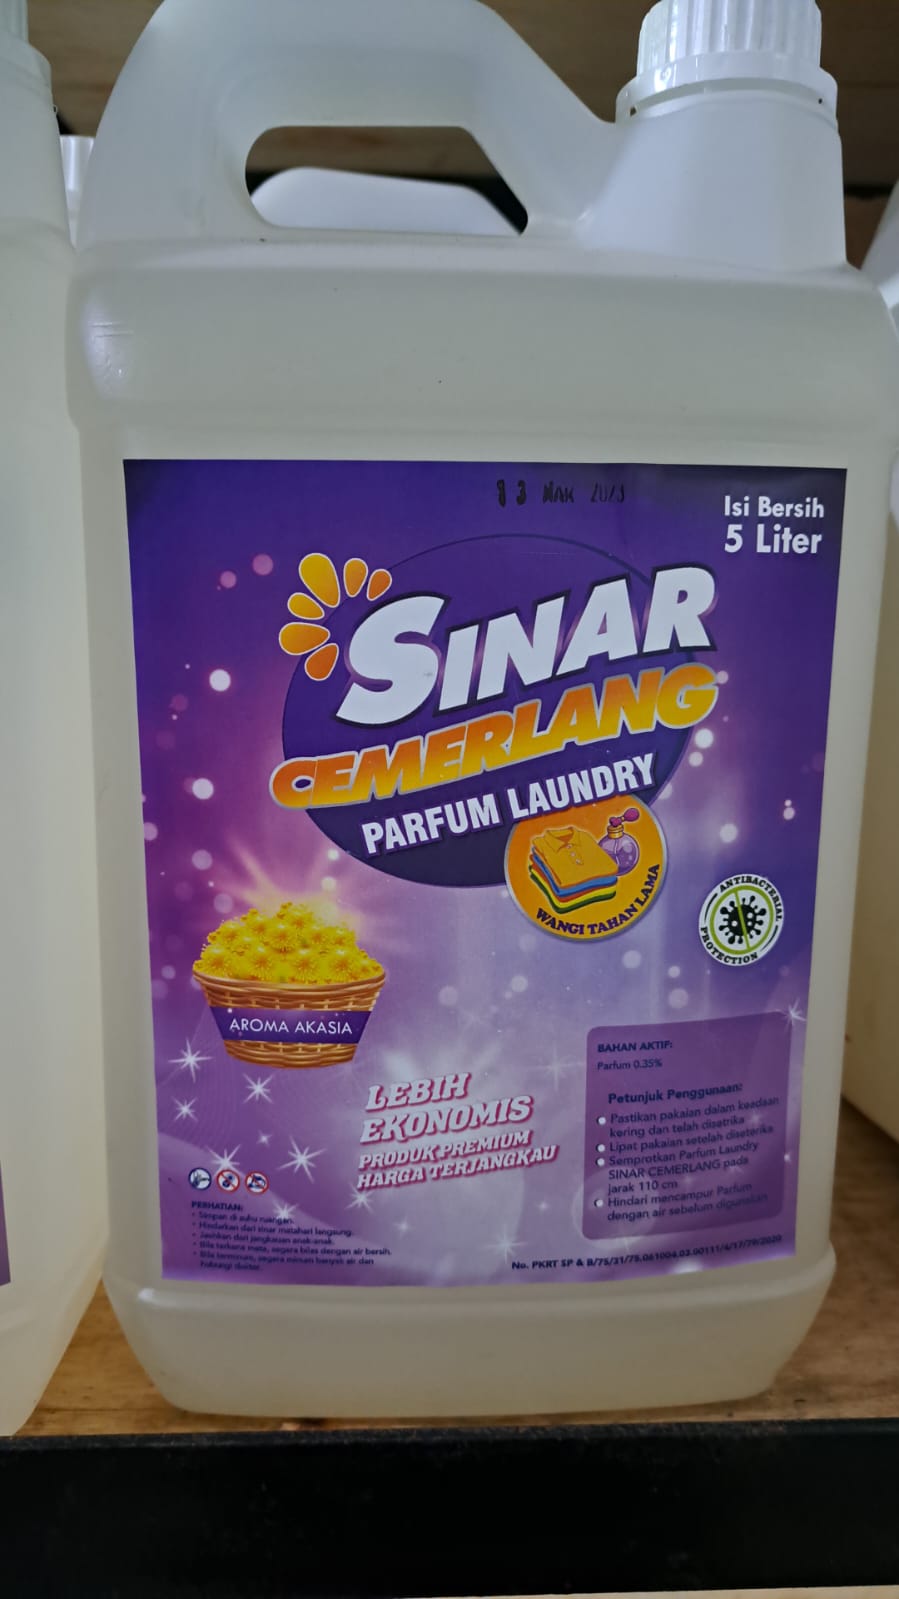 Parfum Laundry Sinar Cemerlang Aroma Akasia 5 liter